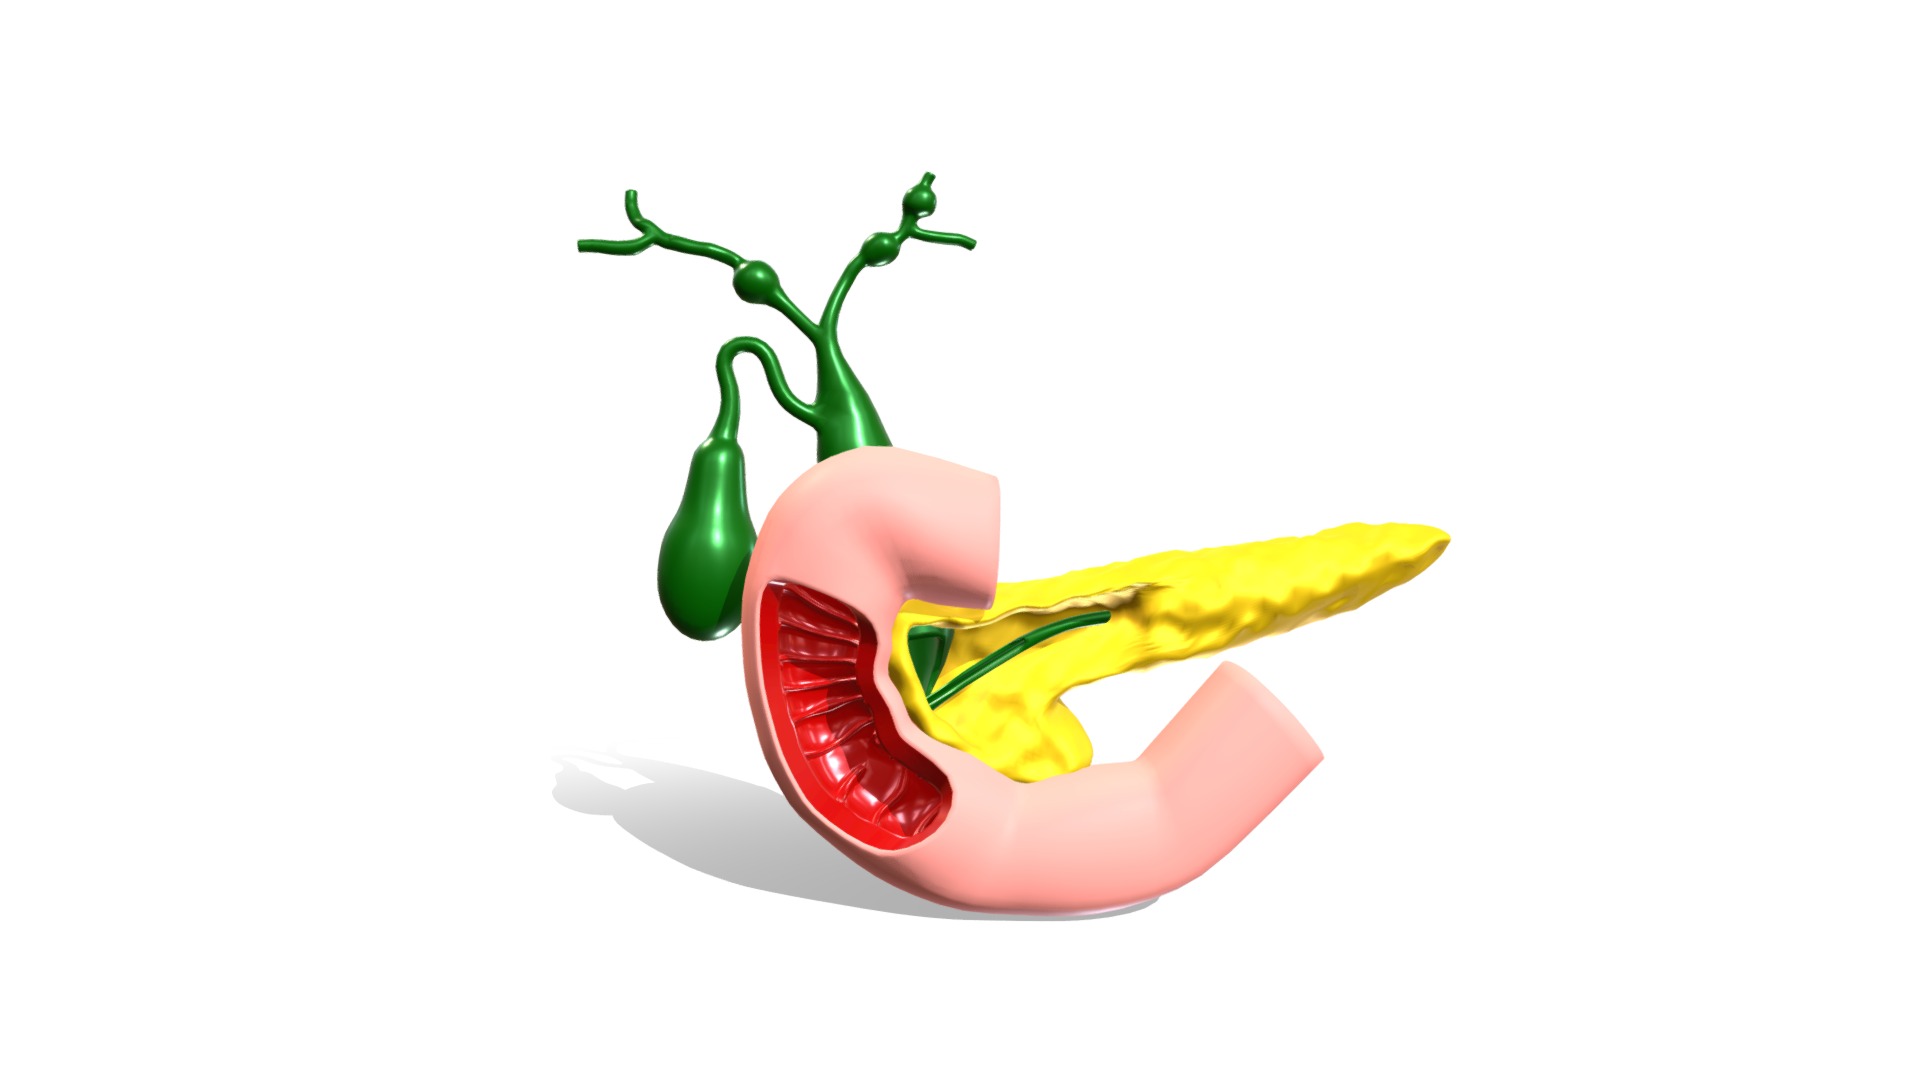 3D model Type 4 – Choledochal Cyst / Pediatric Surgery - This is a 3D model of the Type 4 - Choledochal Cyst / Pediatric Surgery. The 3D model is about a red and yellow pepper.